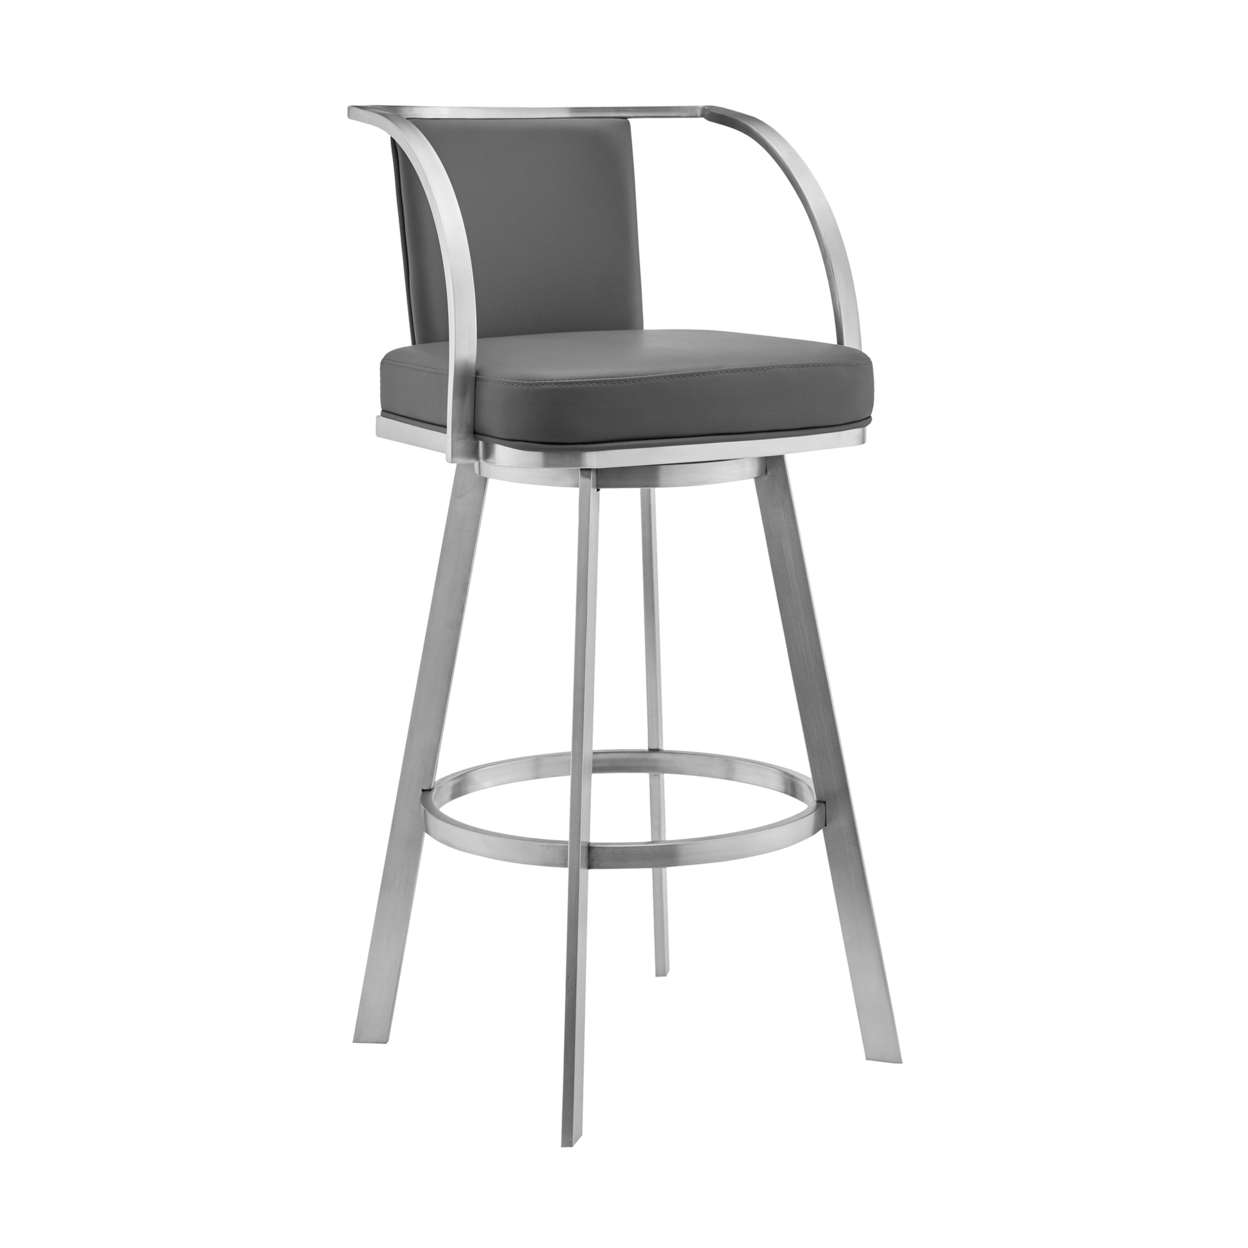 Ovn 30 Inch Swivel Barstool Chair, Gray Faux Leather, Stainless Steel Frame- Saltoro Sherpi